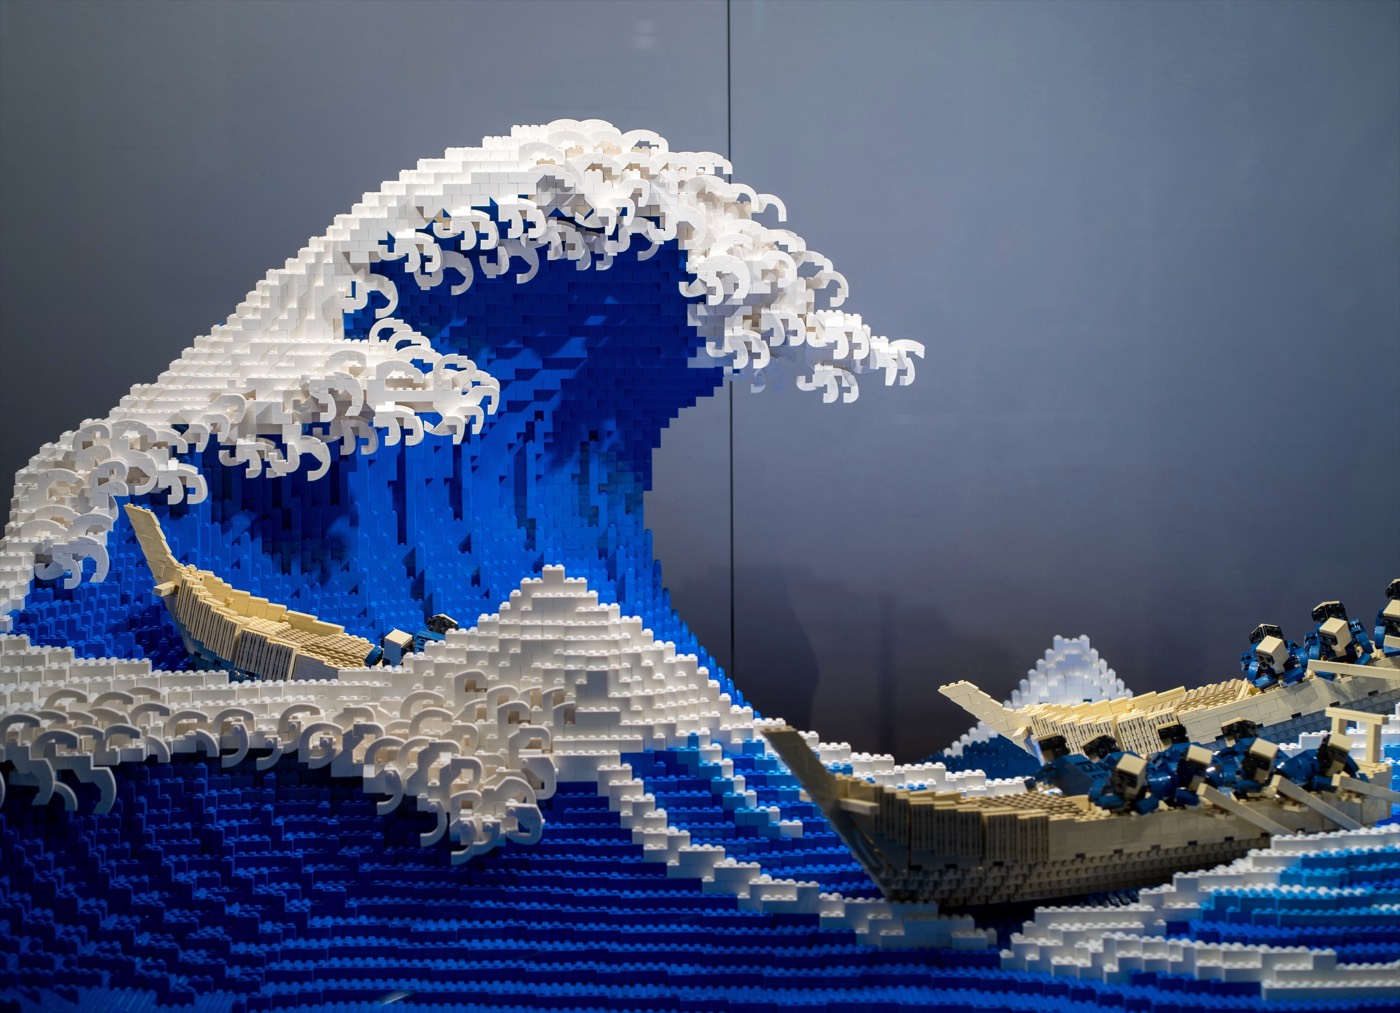 Lego Version of Hokusai's Iconic The Great Wave off Kanagawa